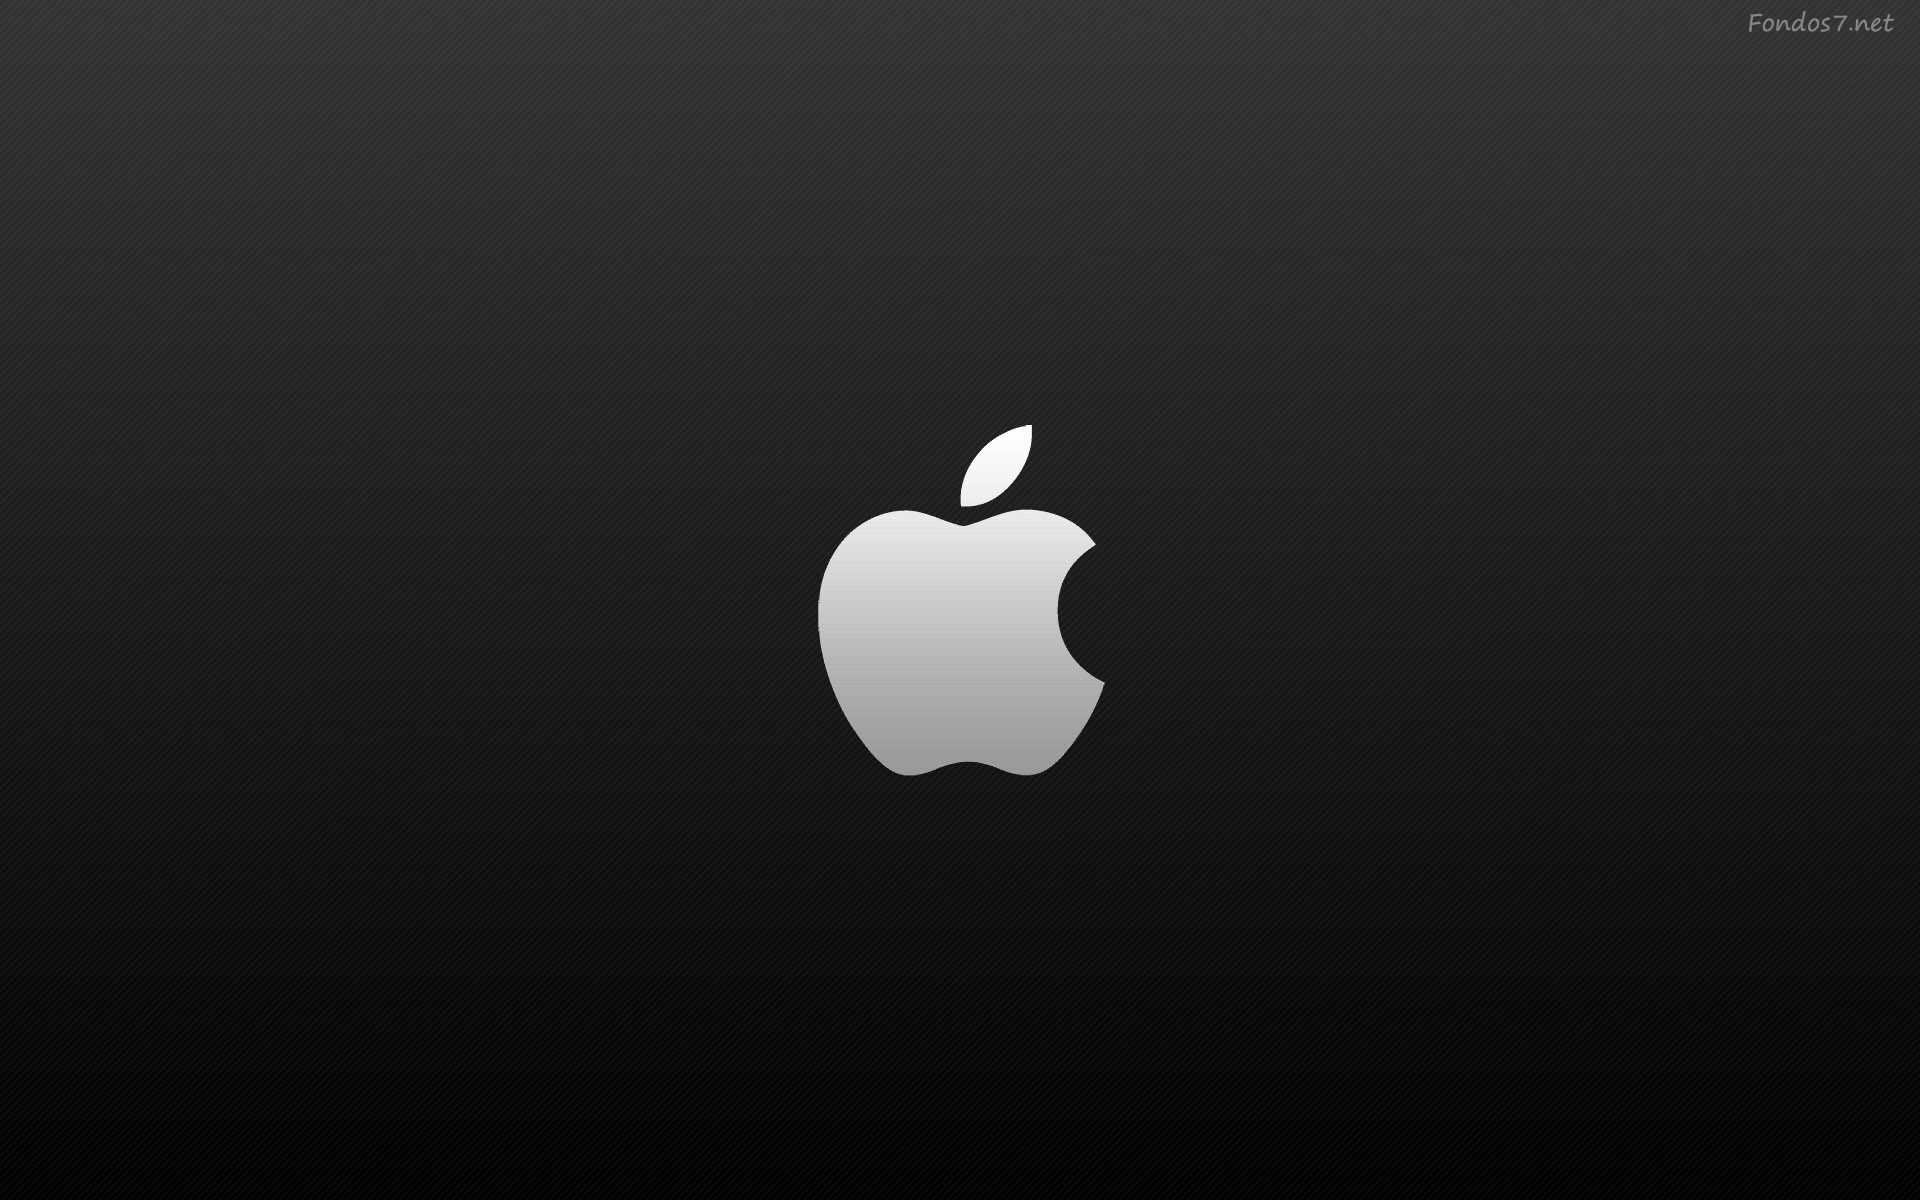  de pantalla logo de apple mac hd widescreen Gratis imagenes